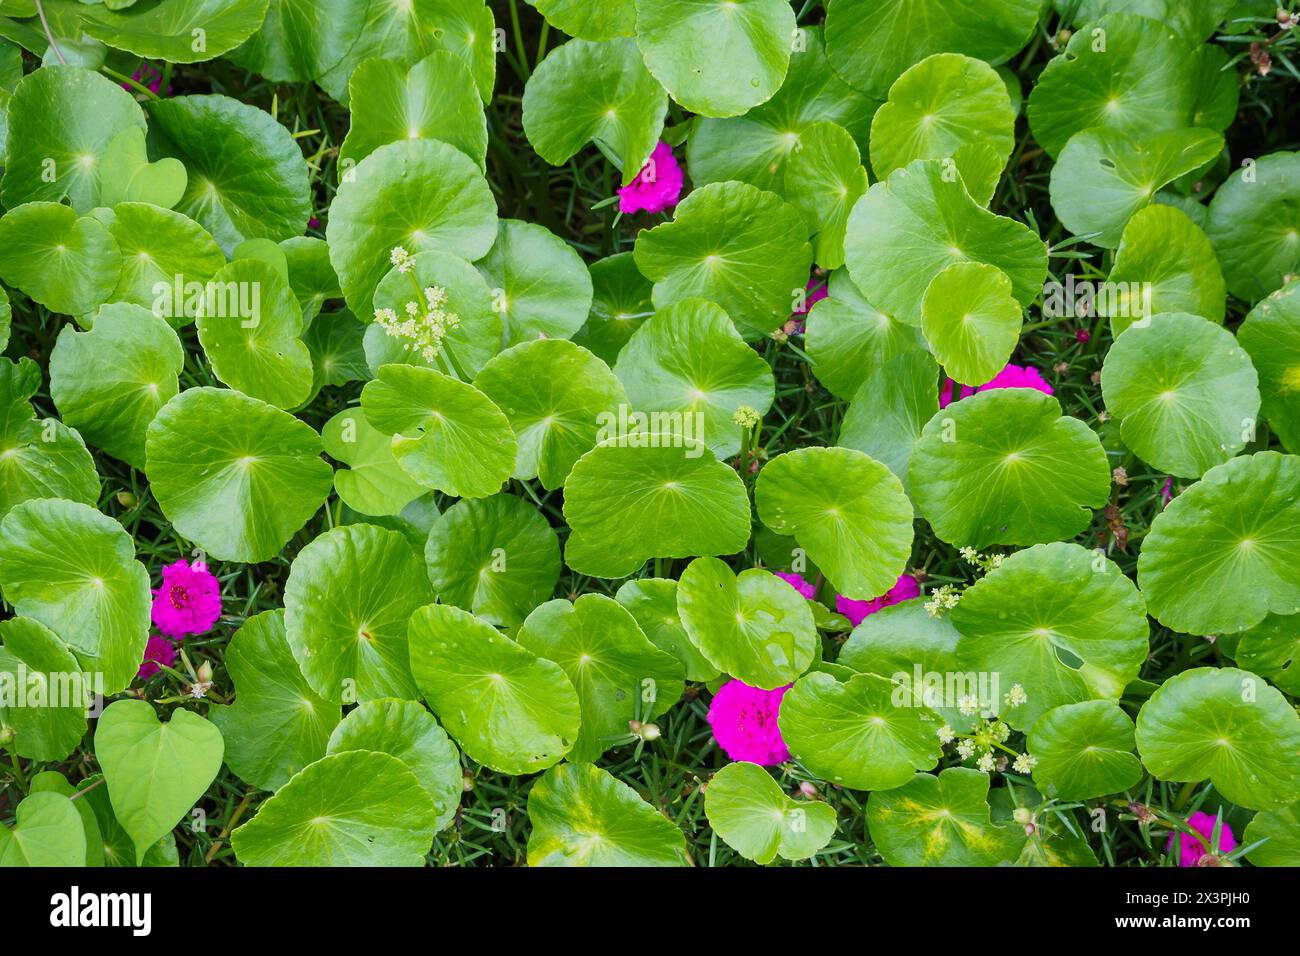 Herbal medicine leaves of Centella asiatica known as gotu kola Stock Photo